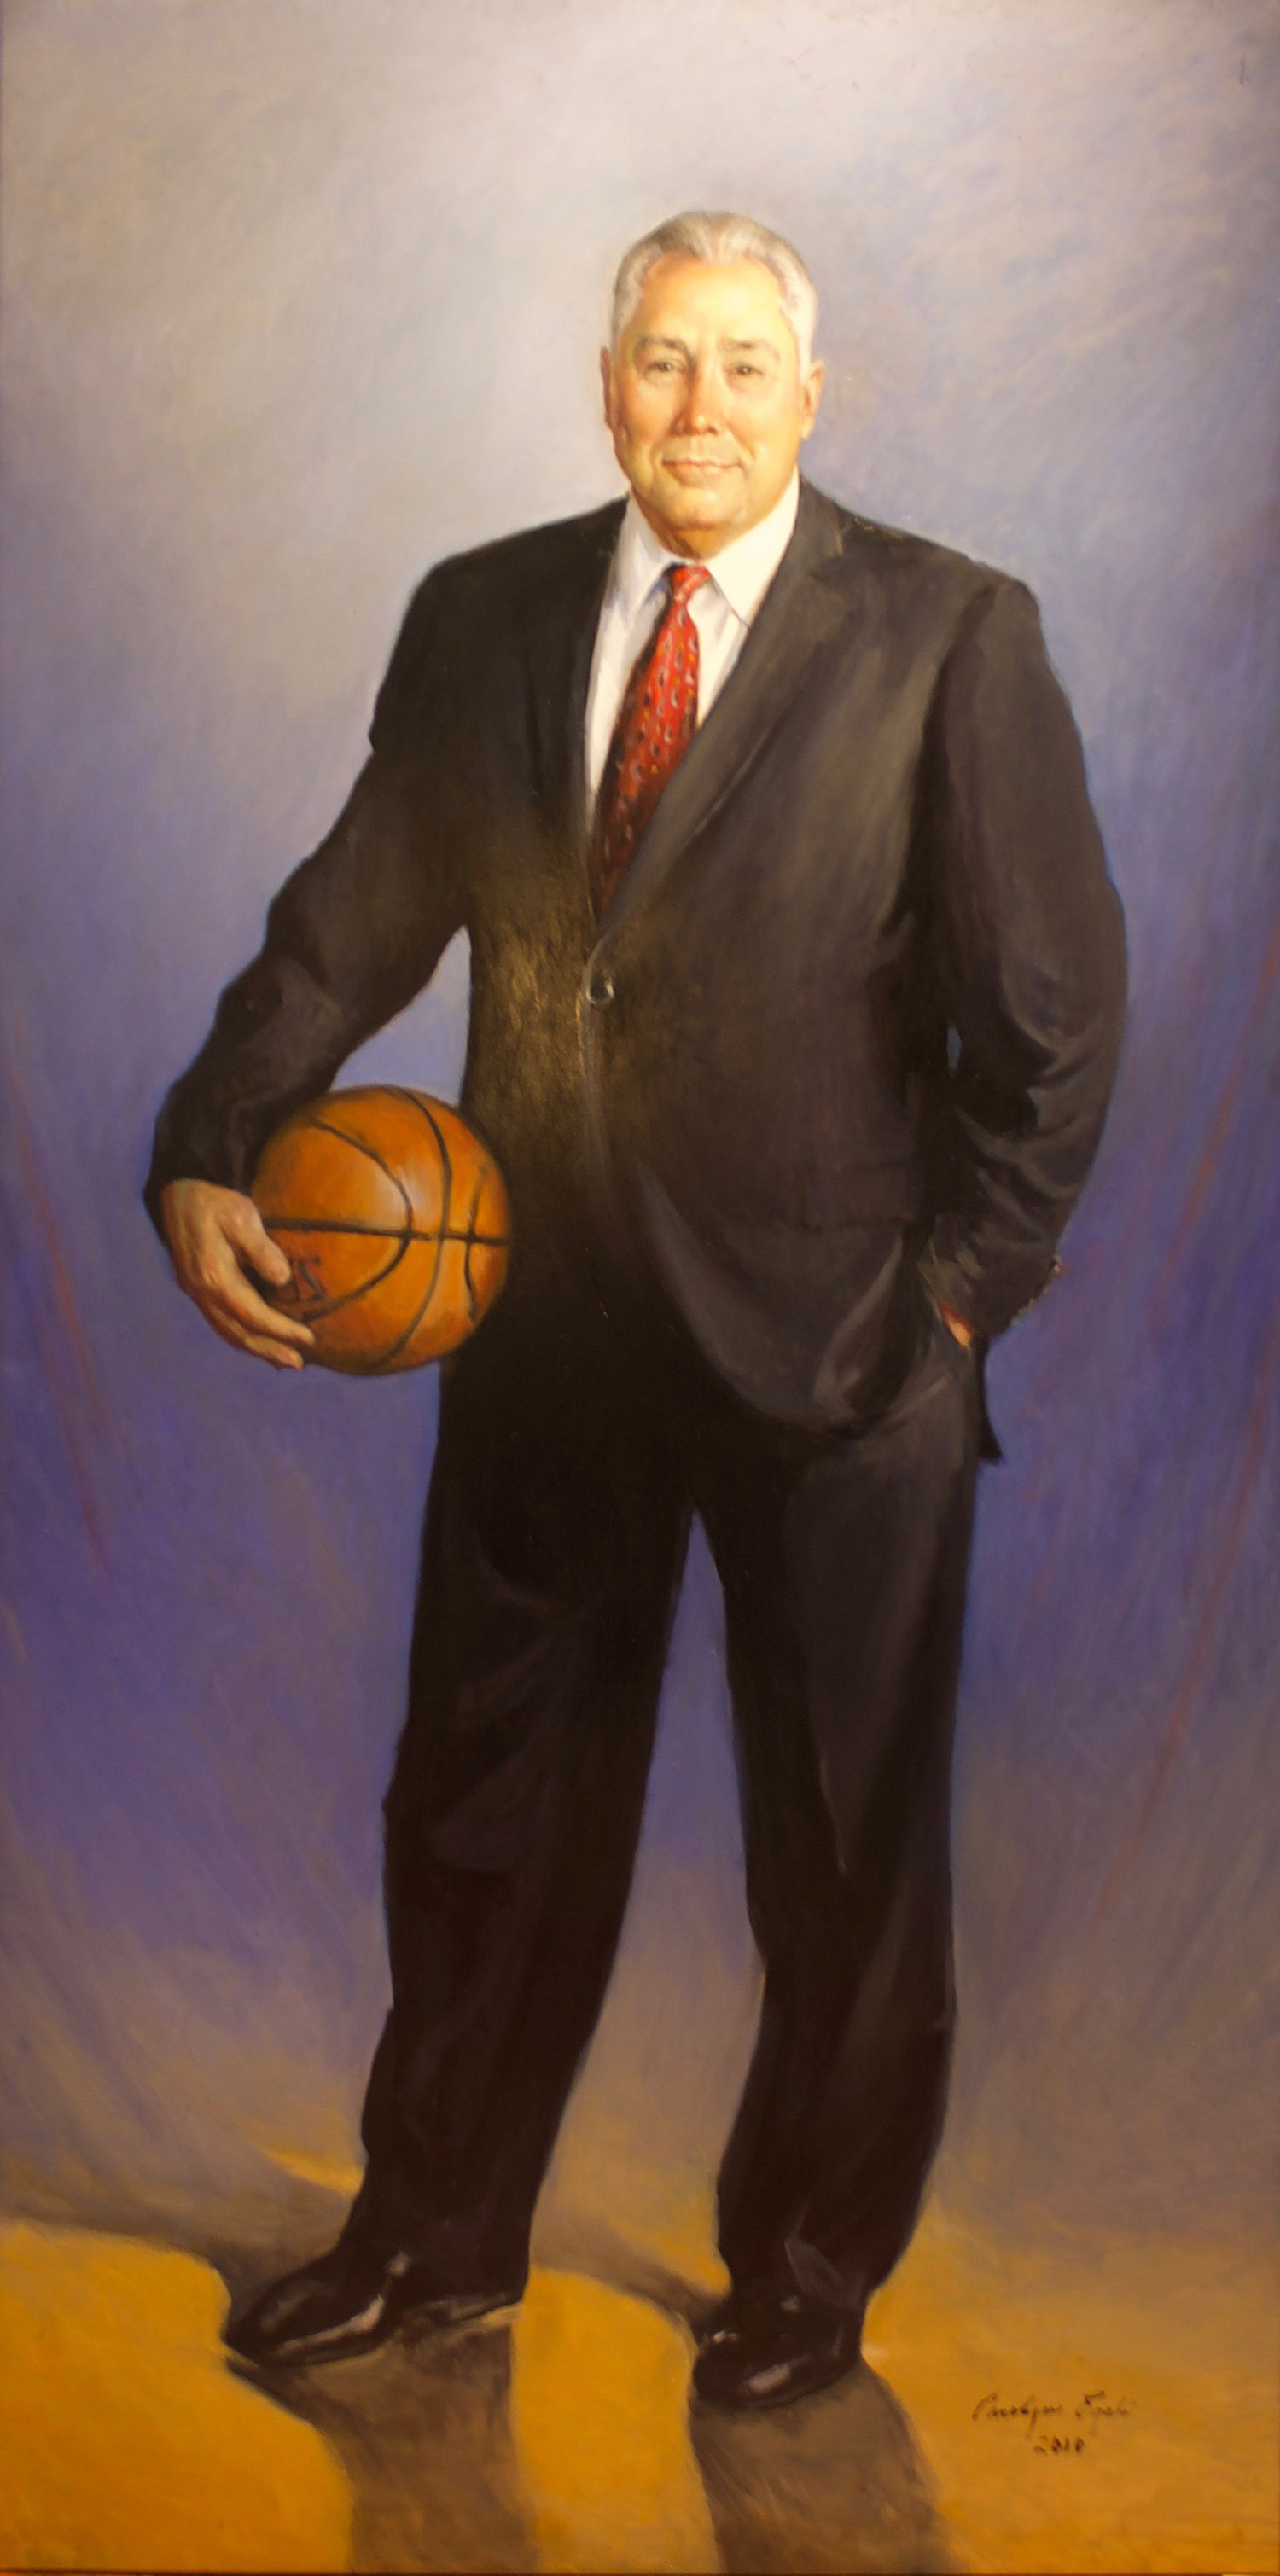 Mr. Mike O'Brien, 42" x 80". Commission